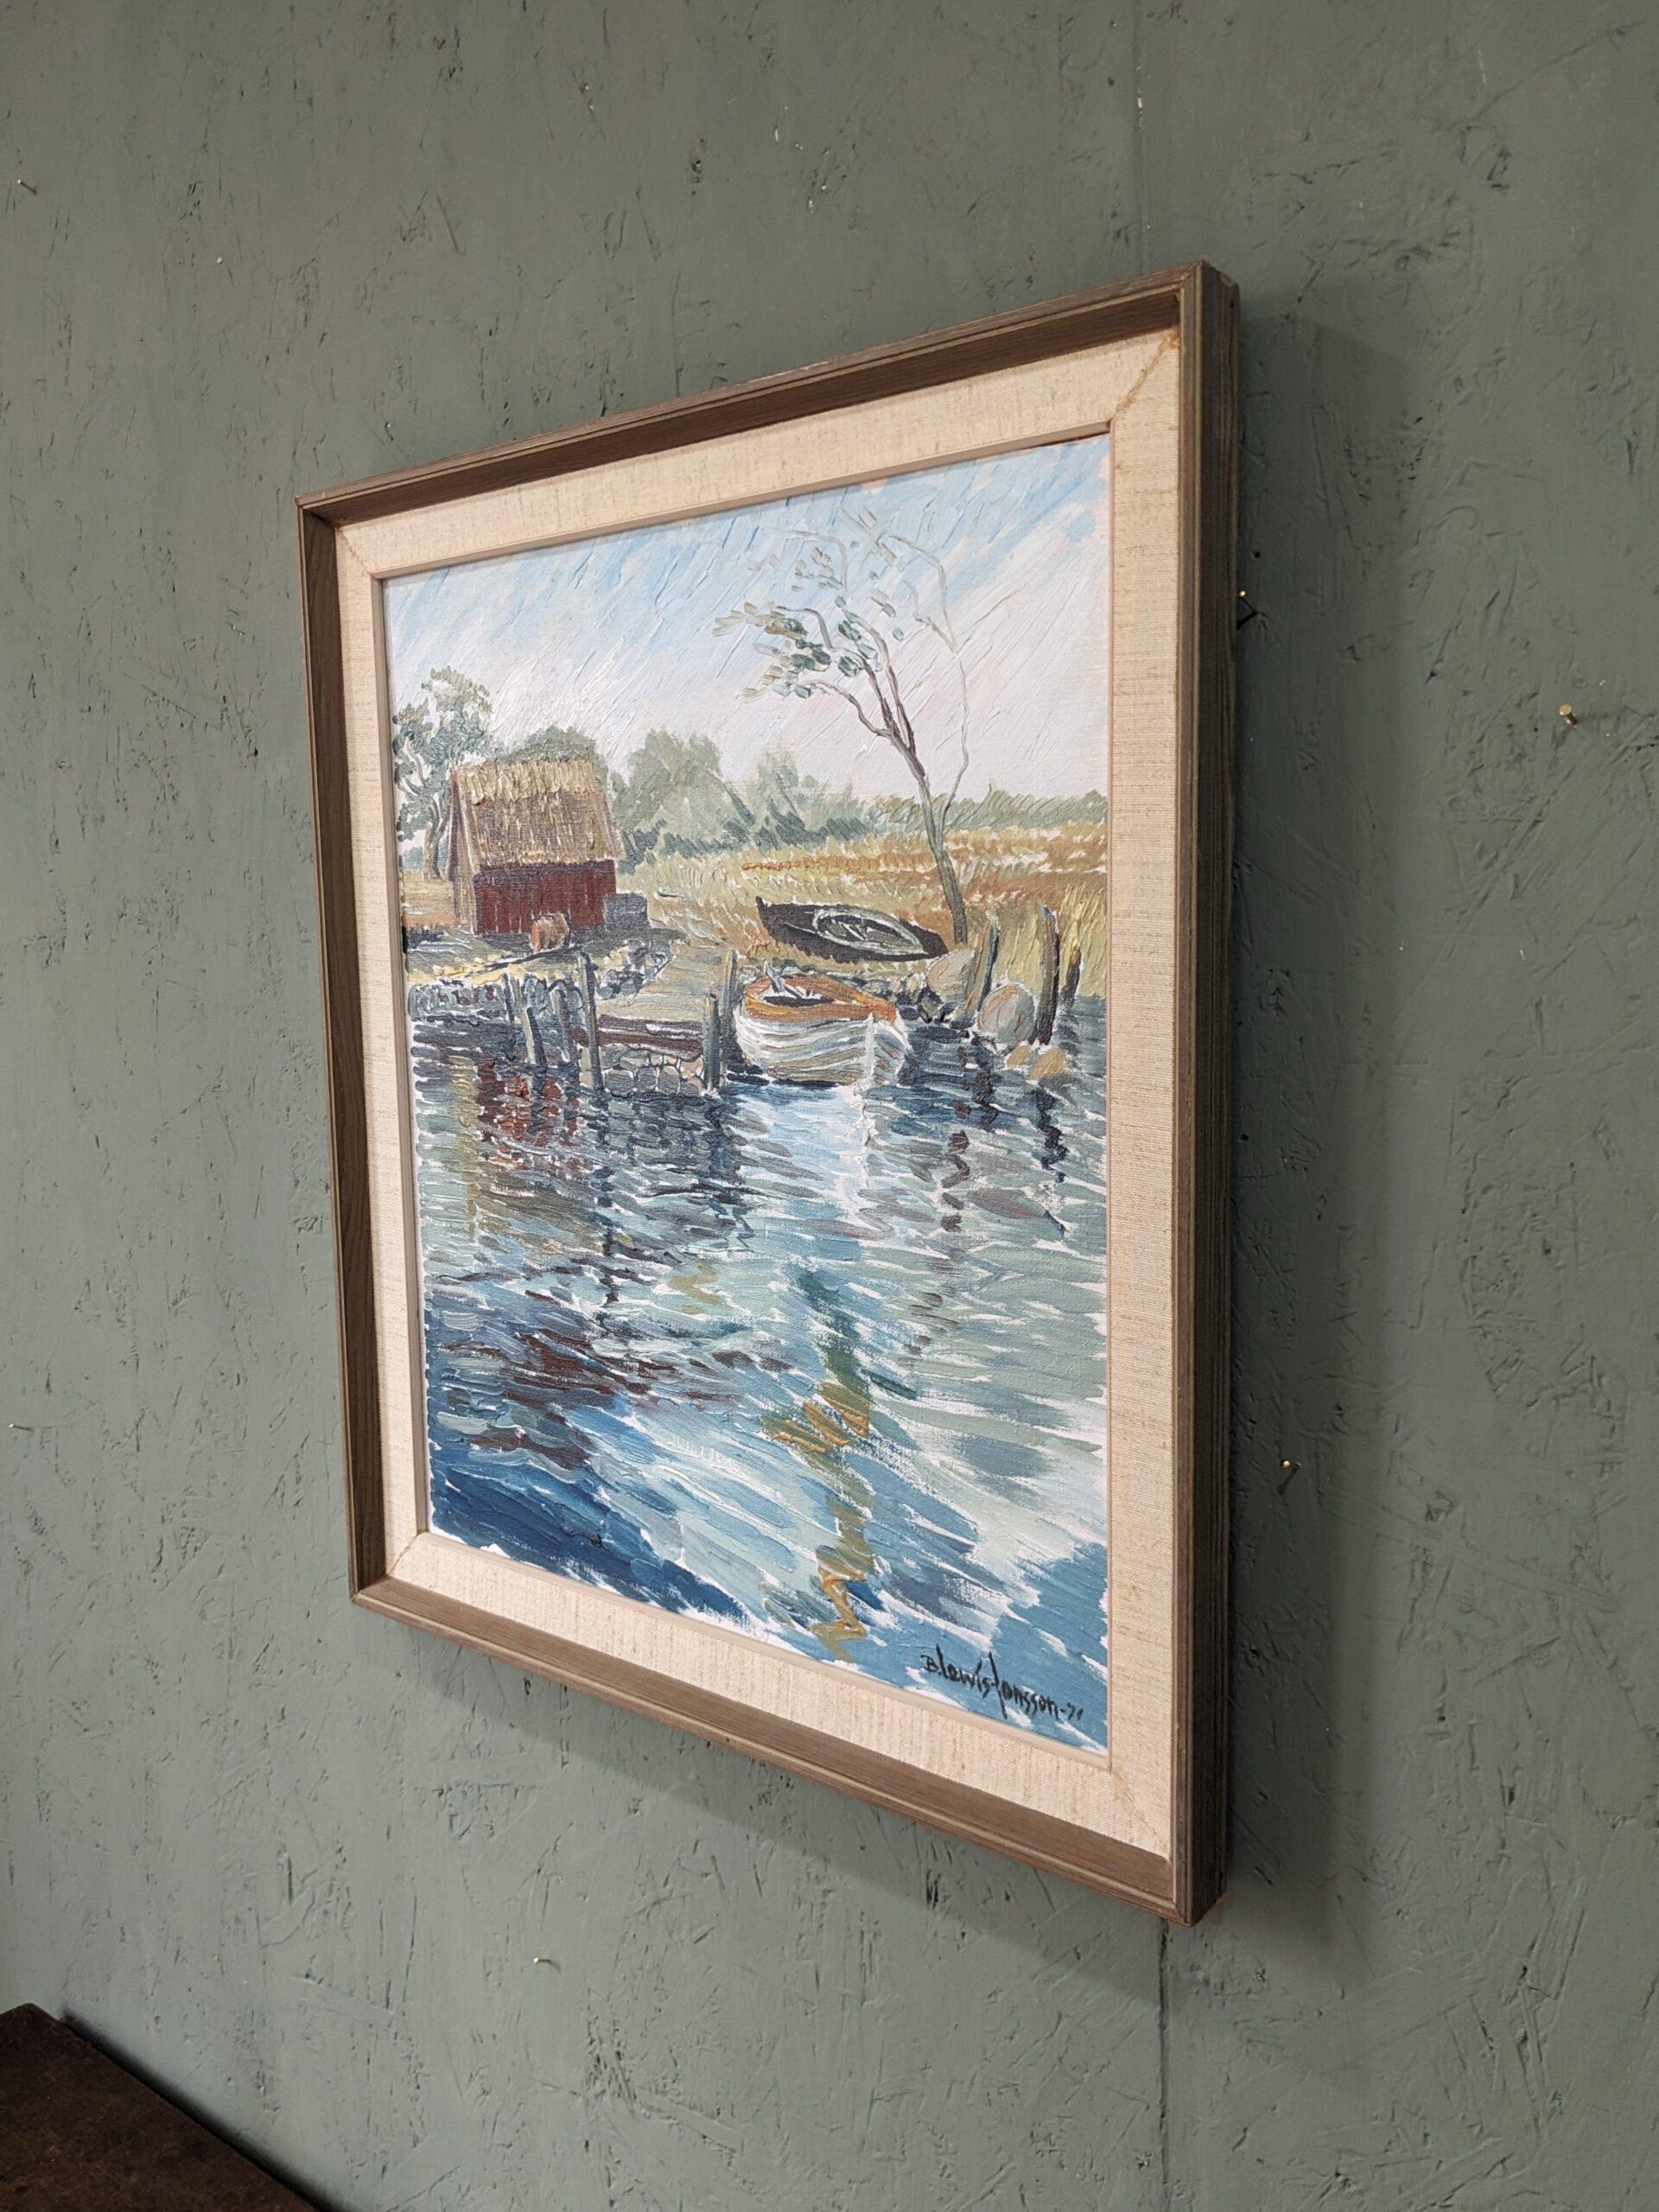 1971 Mid-Century Modern Swedish Framed River Landscape Oil Painting - Boathouse For Sale 1